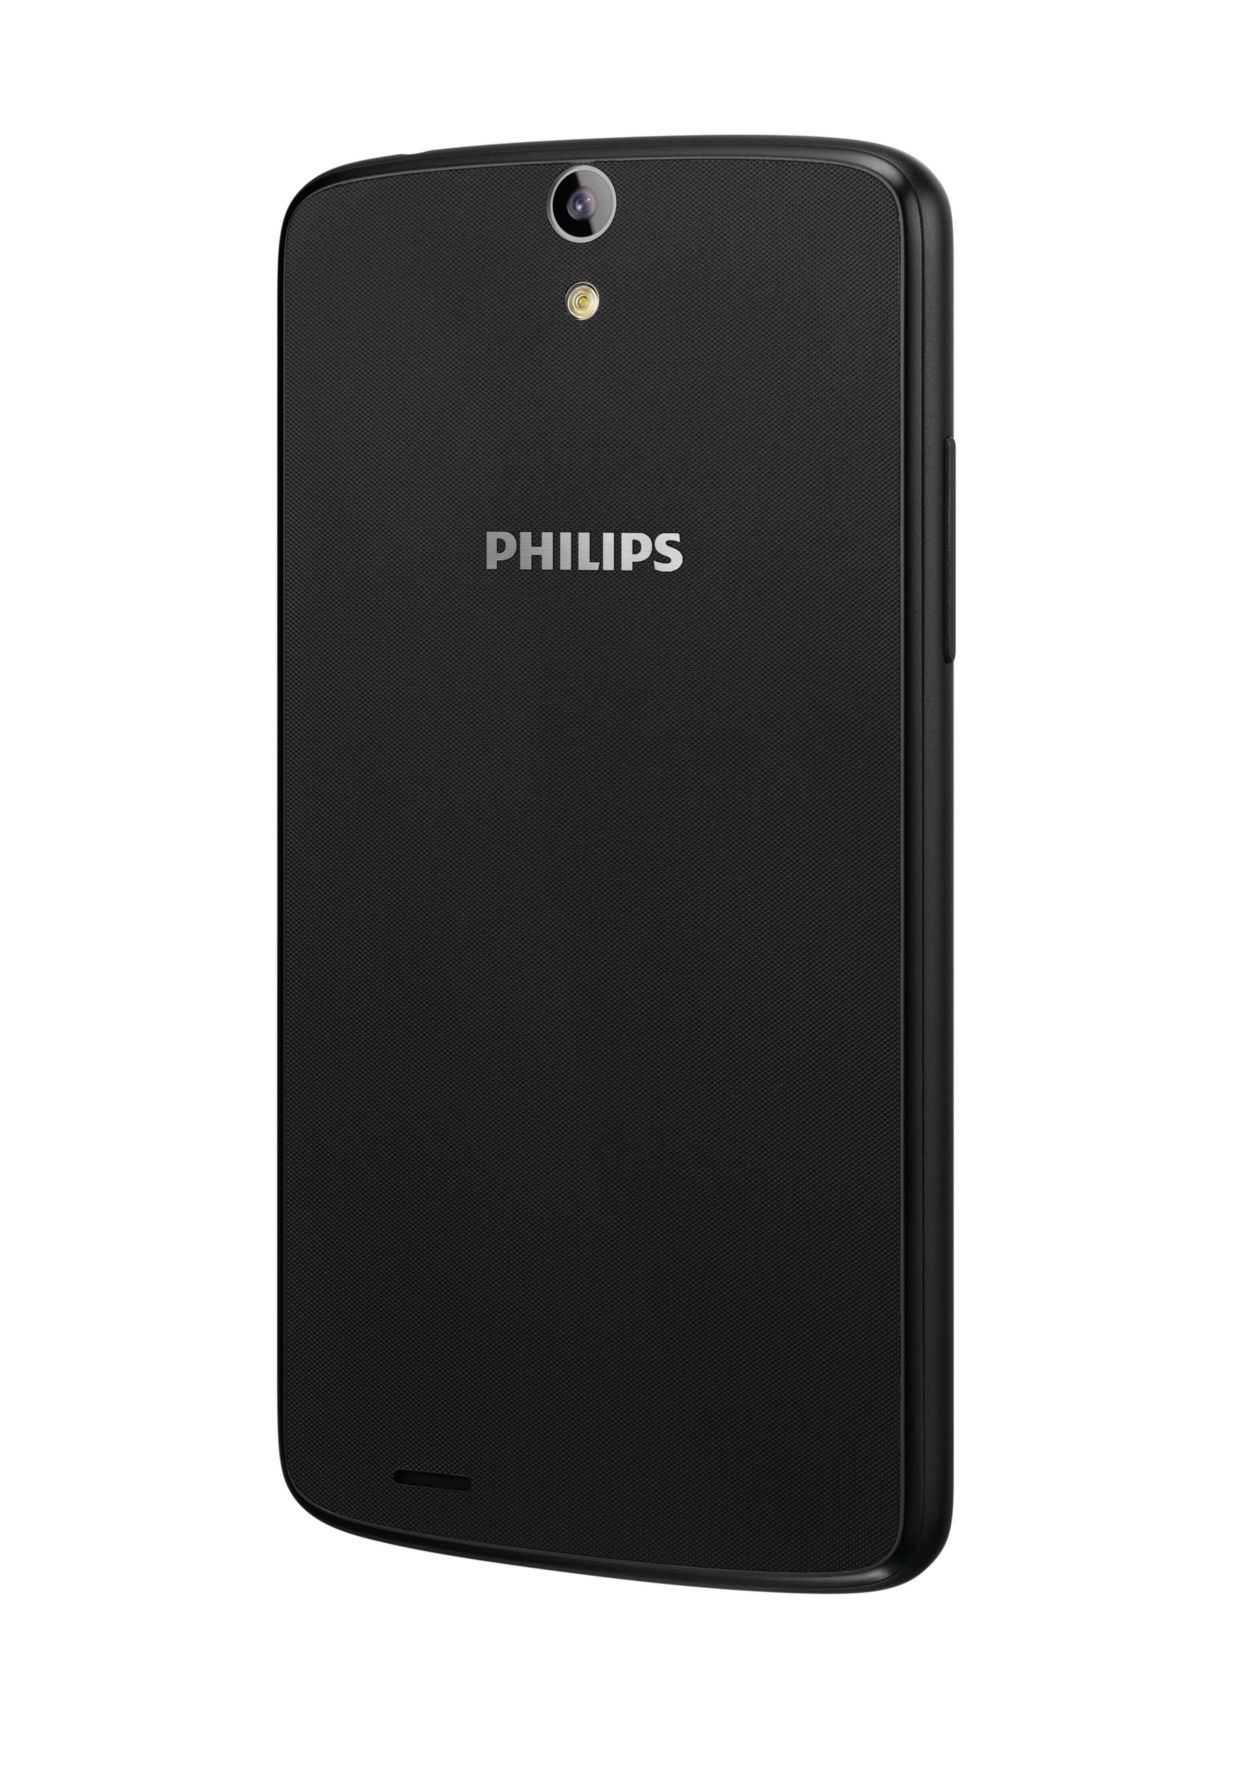 Филипс v. Philips v387. Xenium v387. Телефон Филипс Xenium v 387. Philips Xenium v.